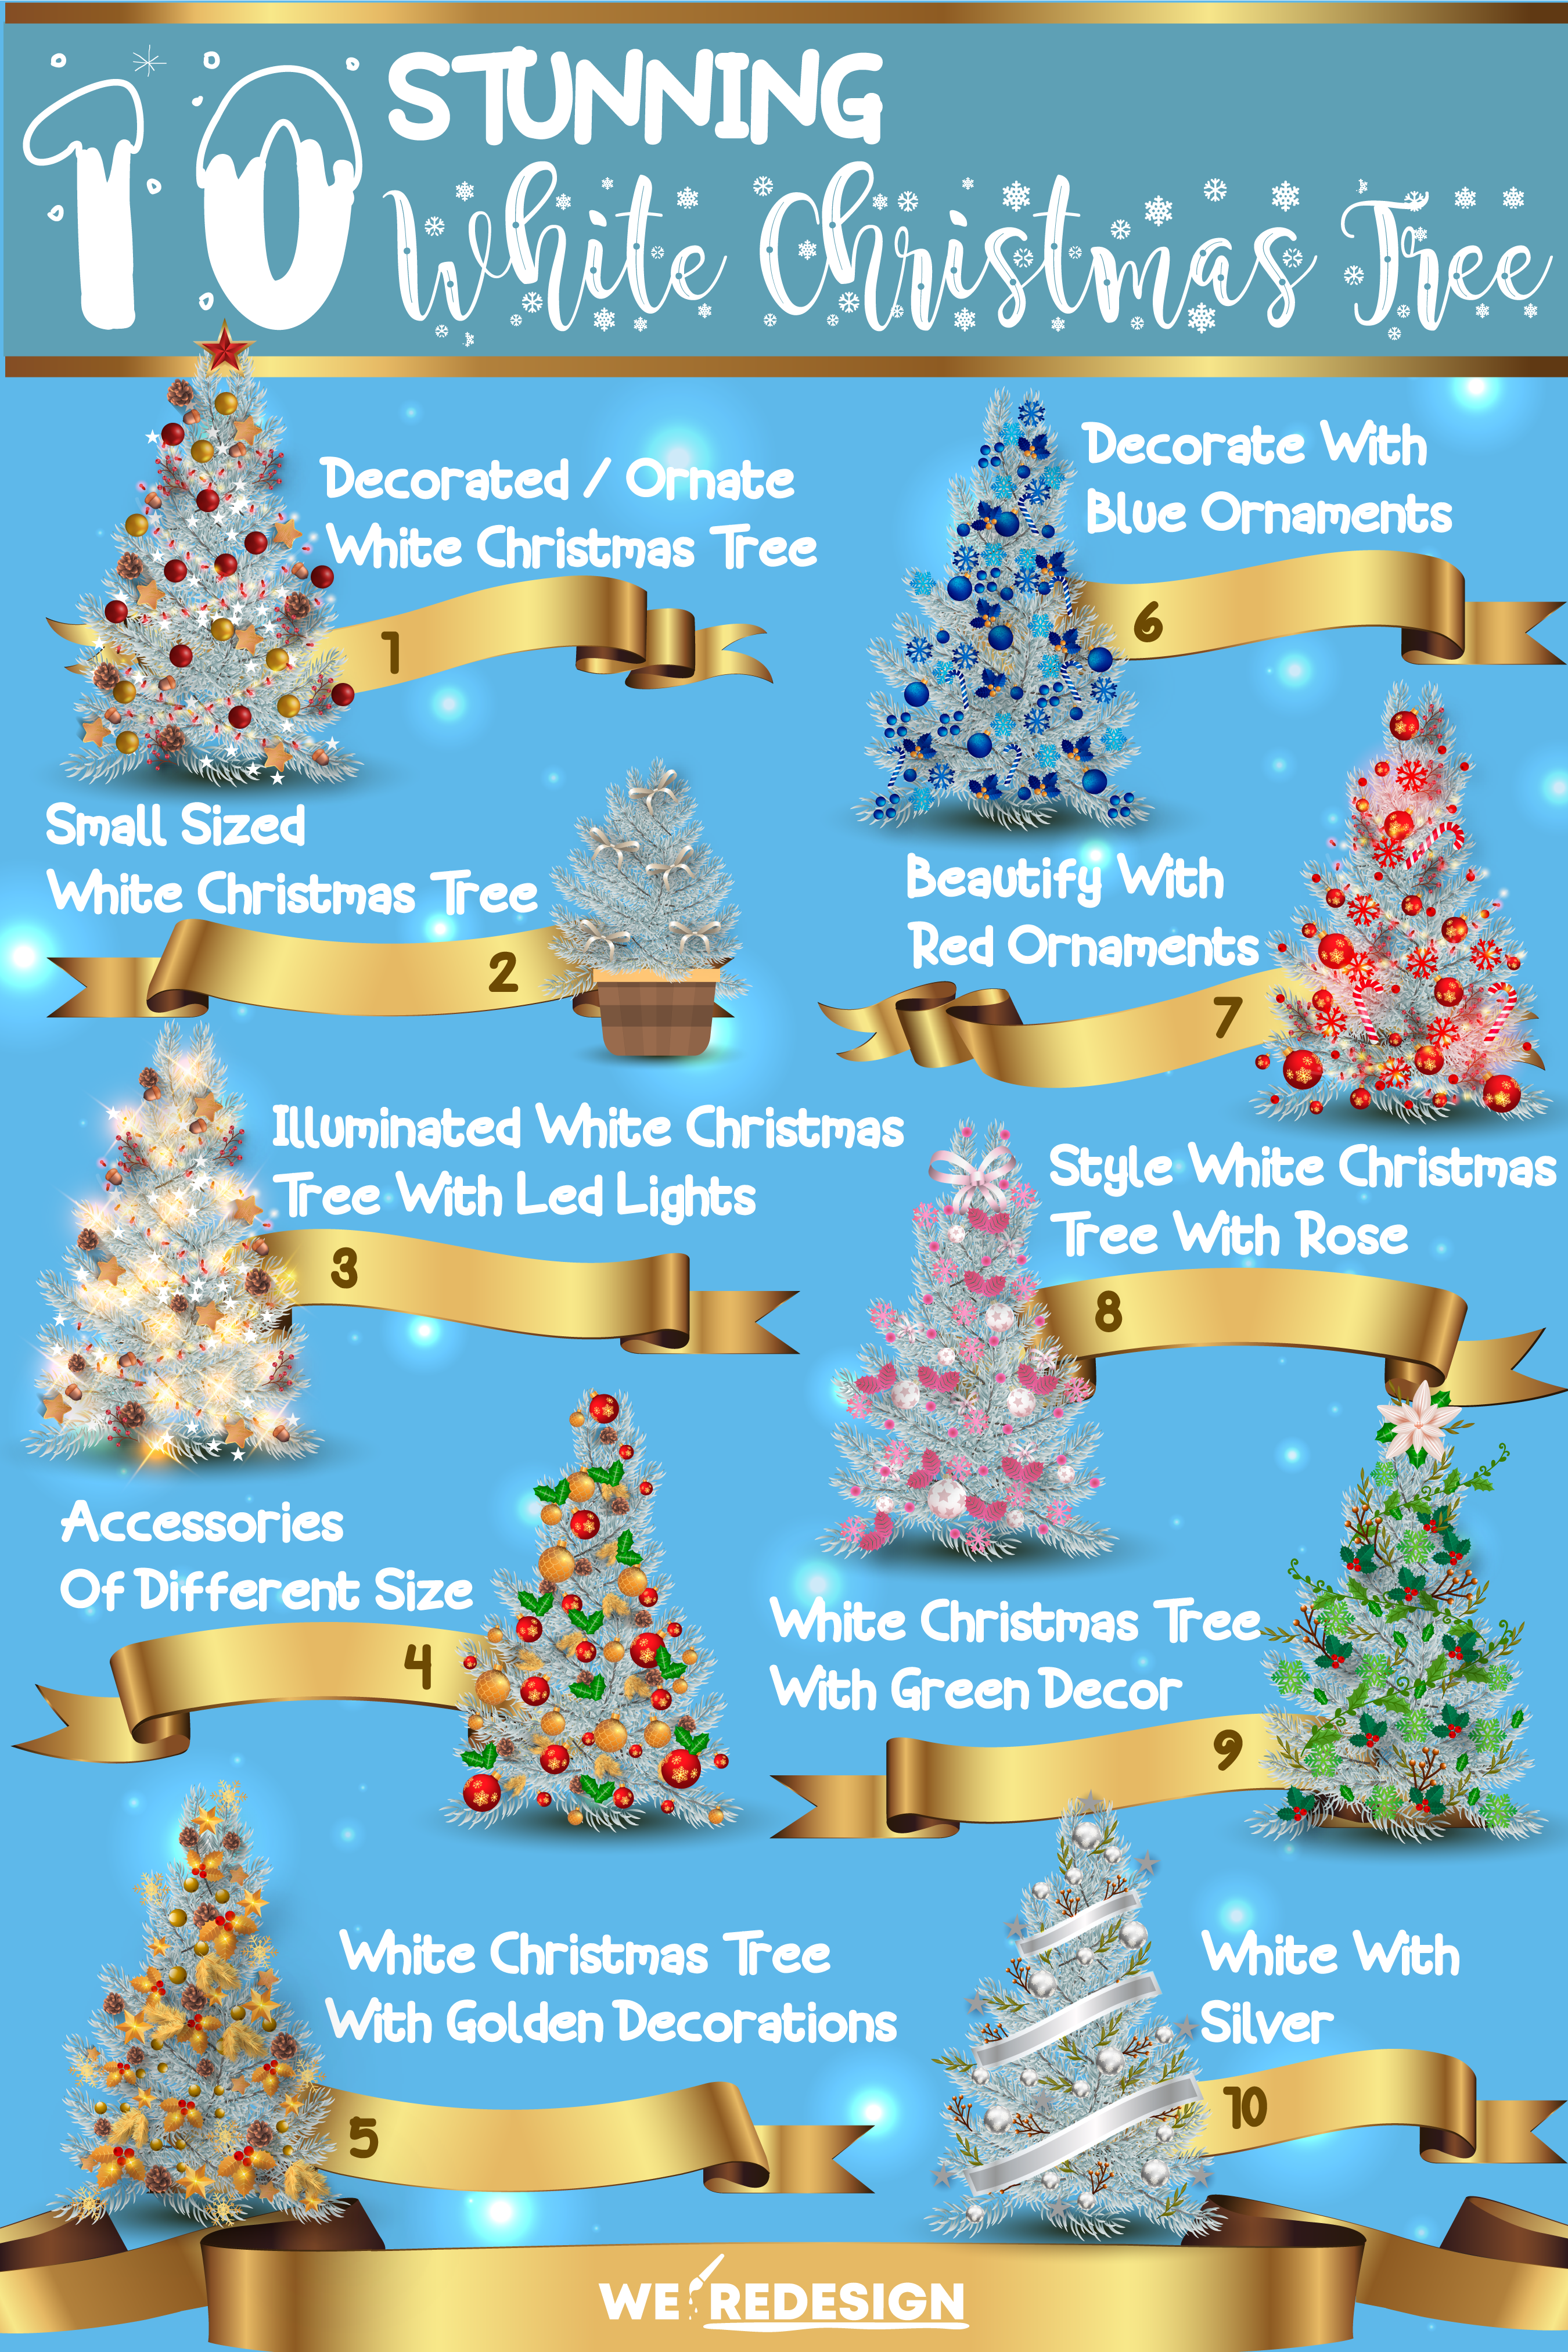 10-Stunning-White-Christmas-Tree-Decor-Ideas